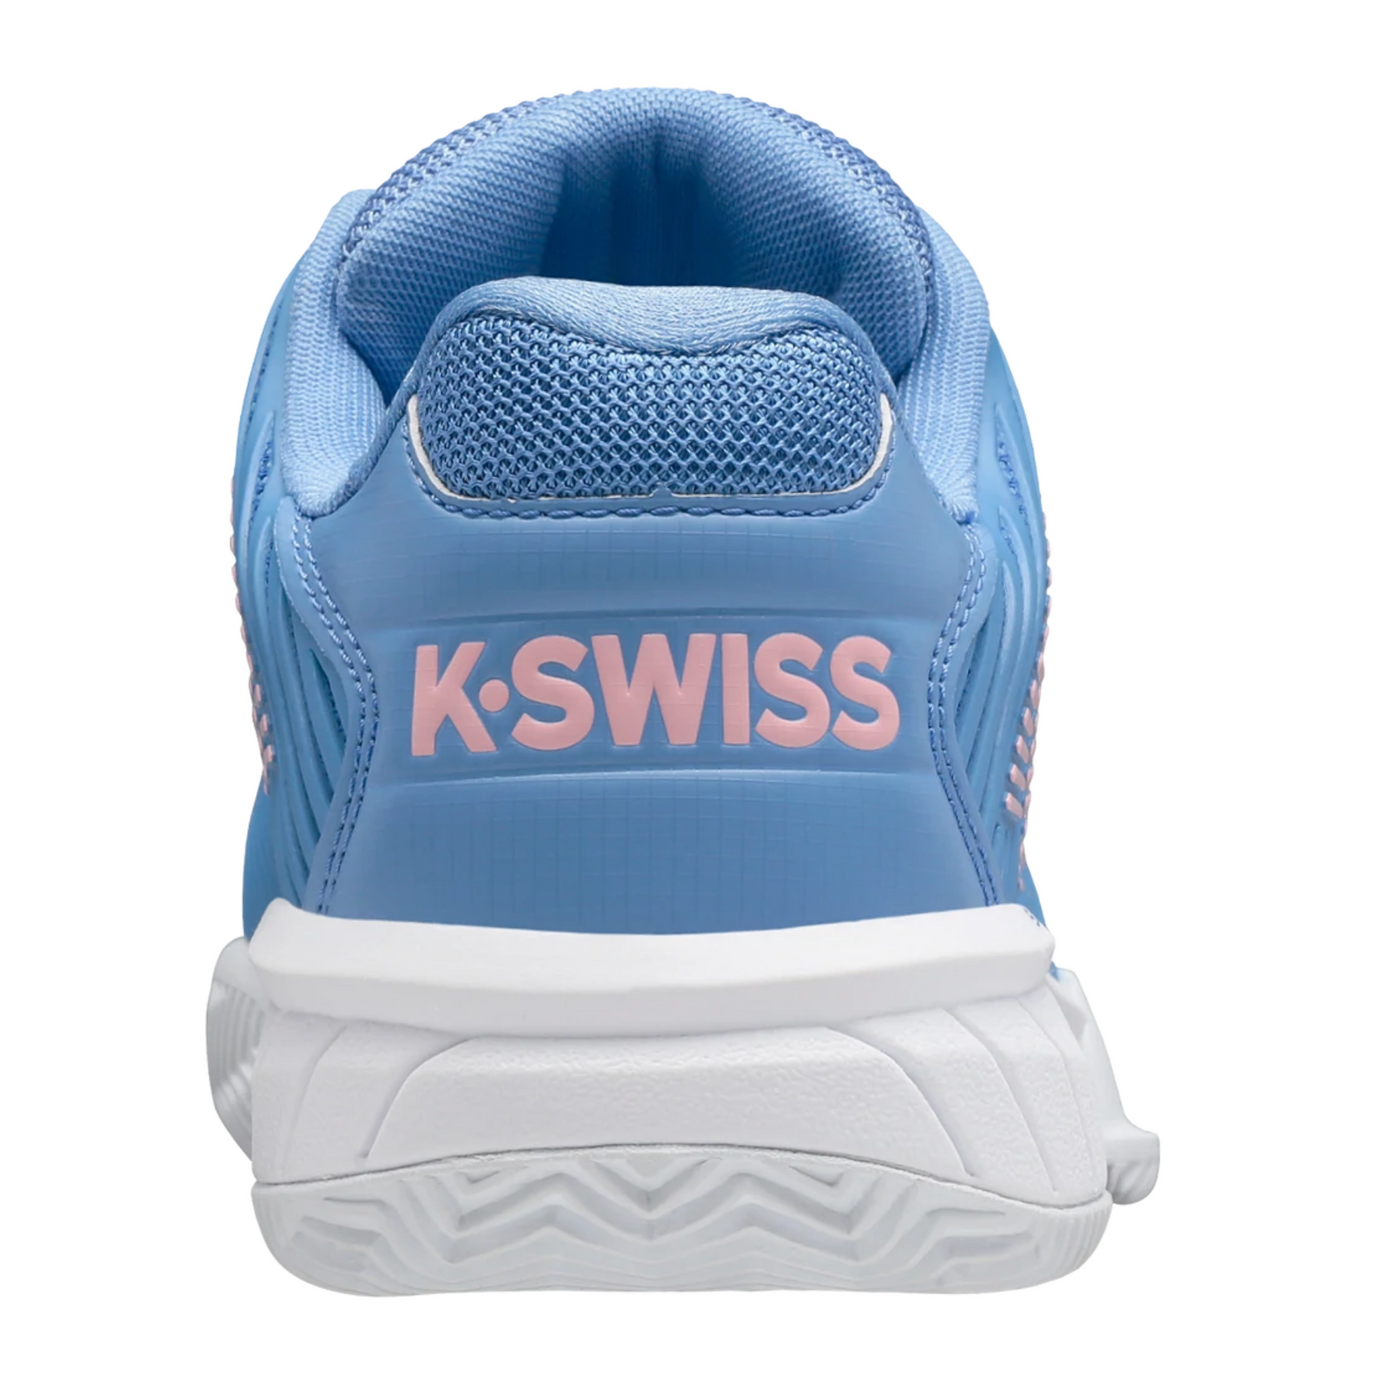 K Swiss Hypercourt Express 2 HB Women Tennis Shoes - Silver Lake Blue/White/Orchid Pink